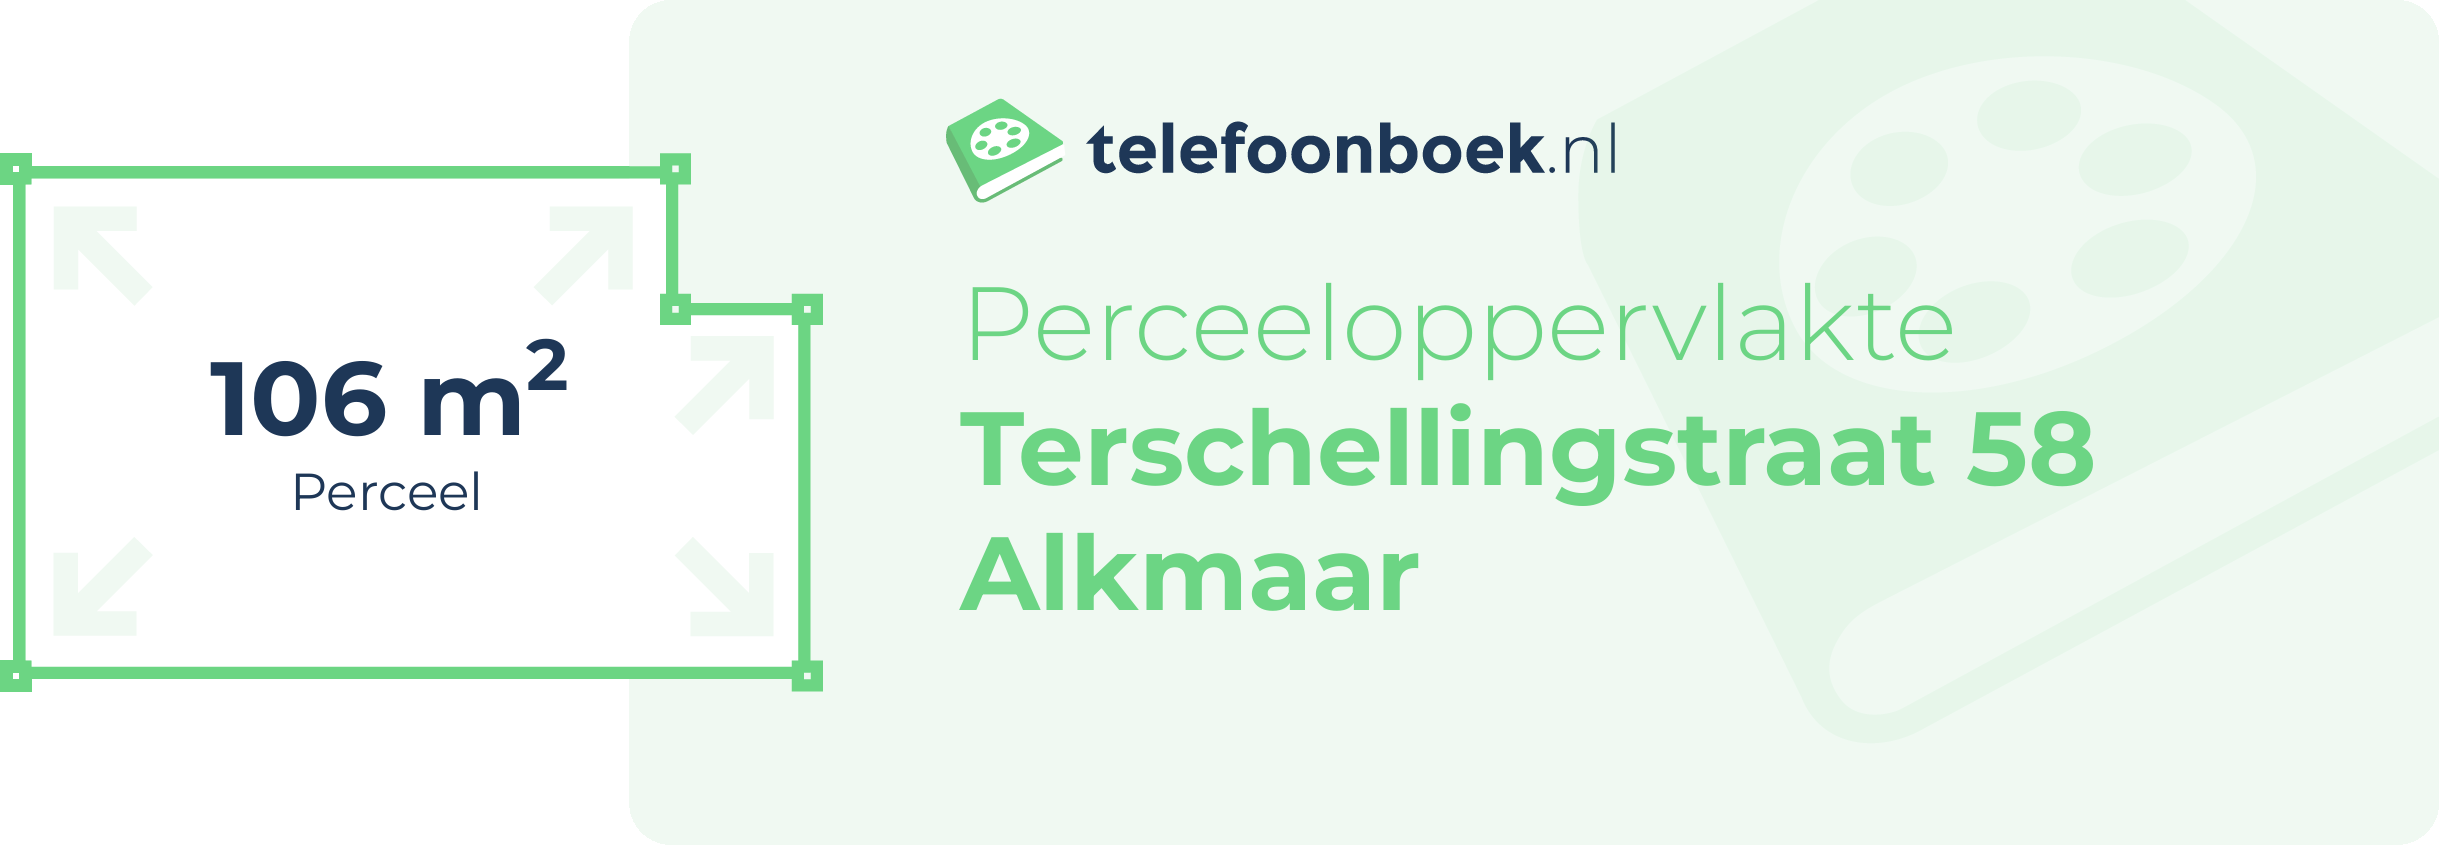 Perceeloppervlakte Terschellingstraat 58 Alkmaar